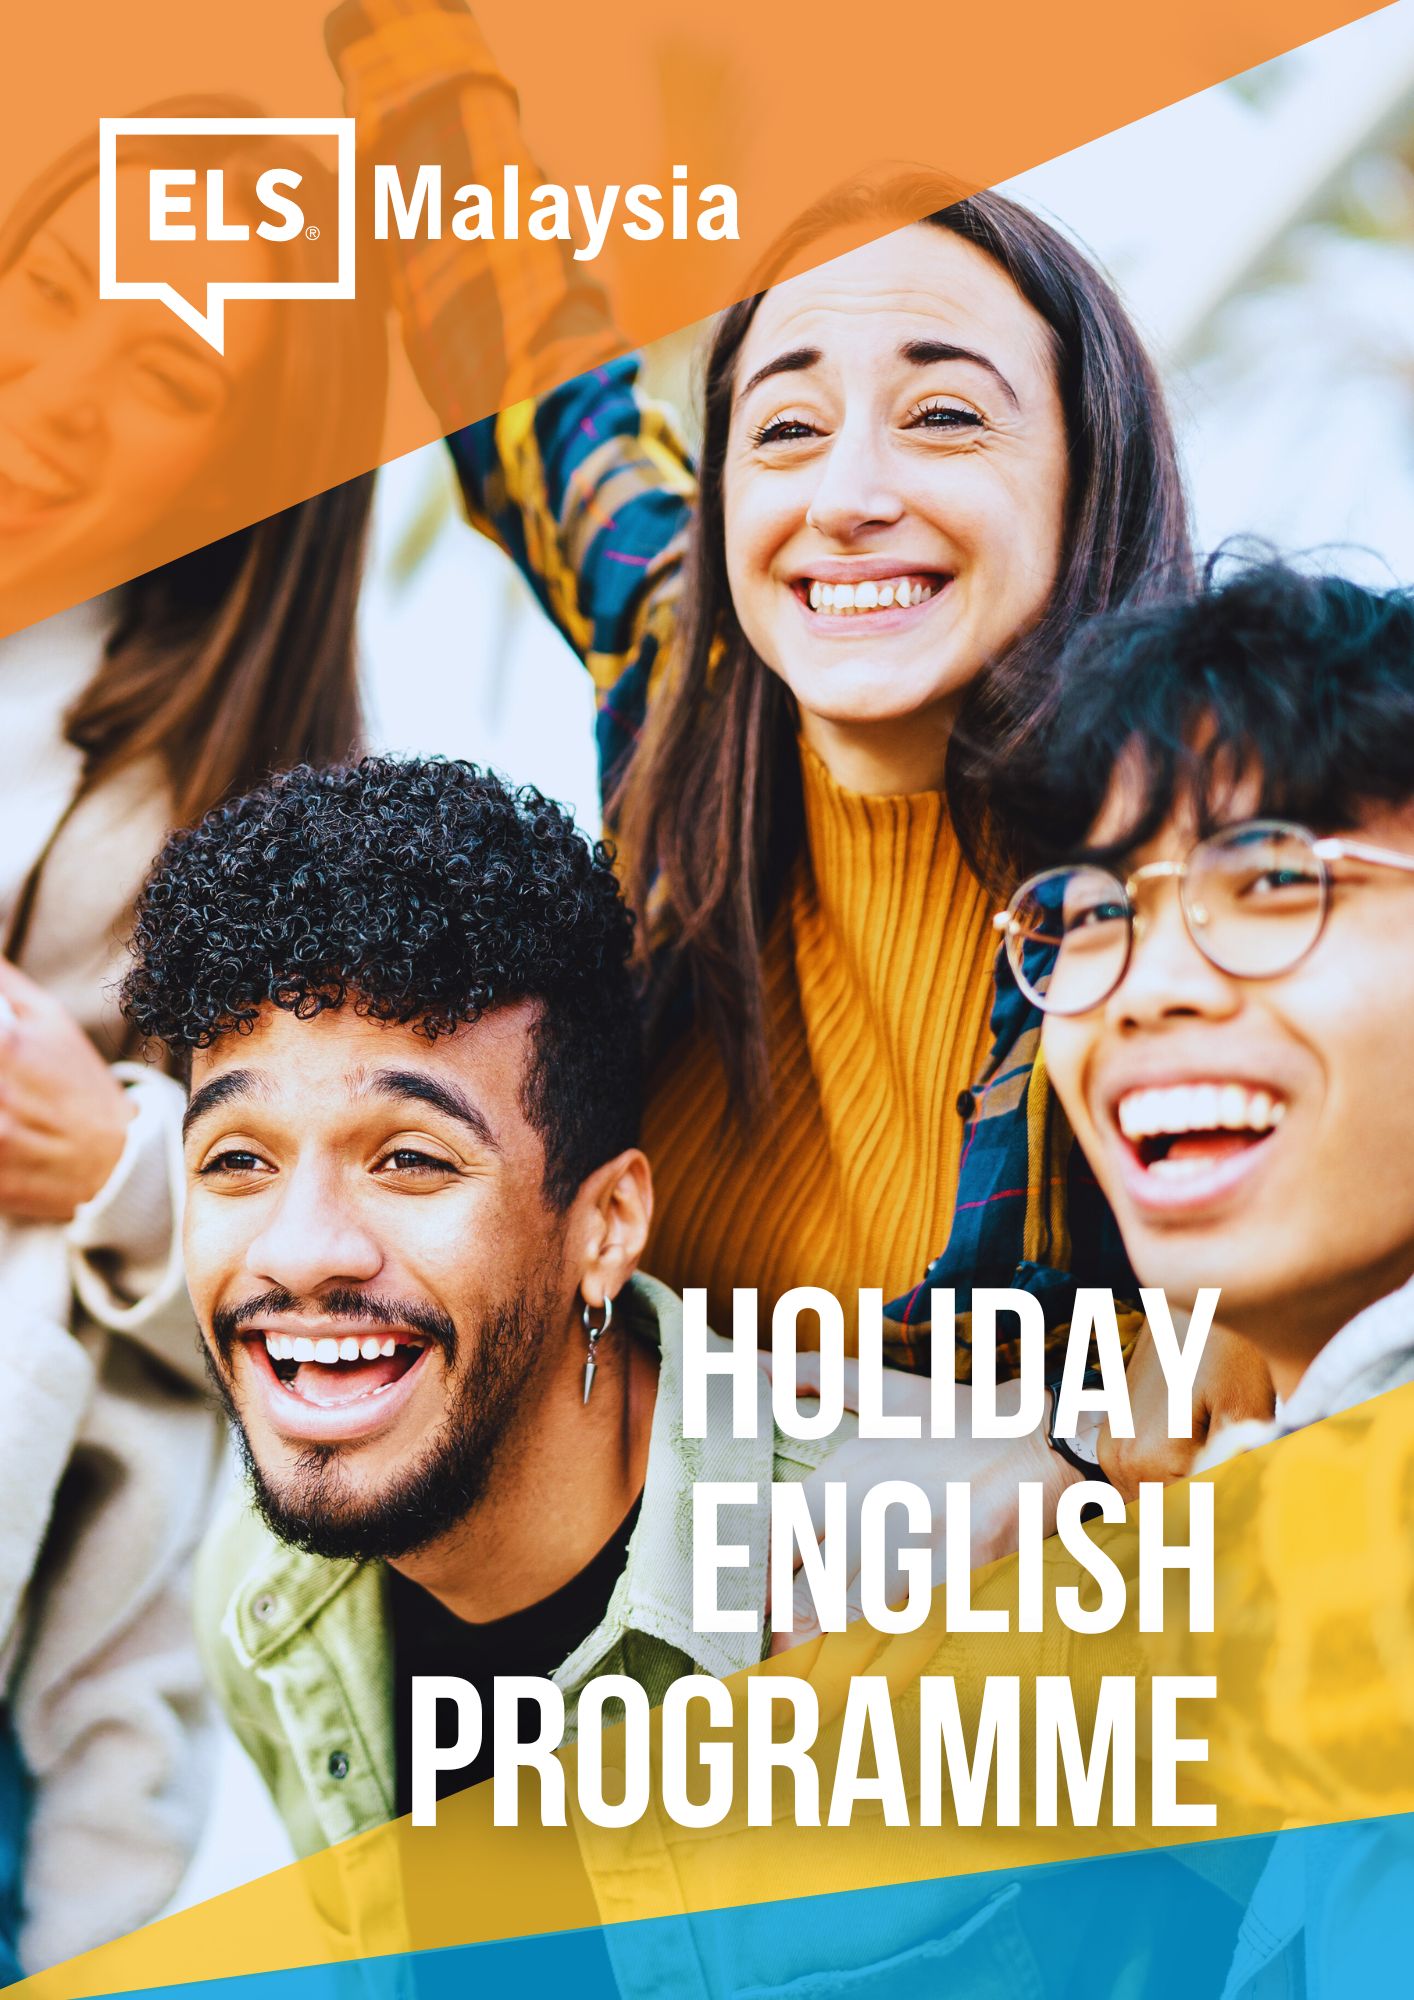 ELS Holiday English Programme